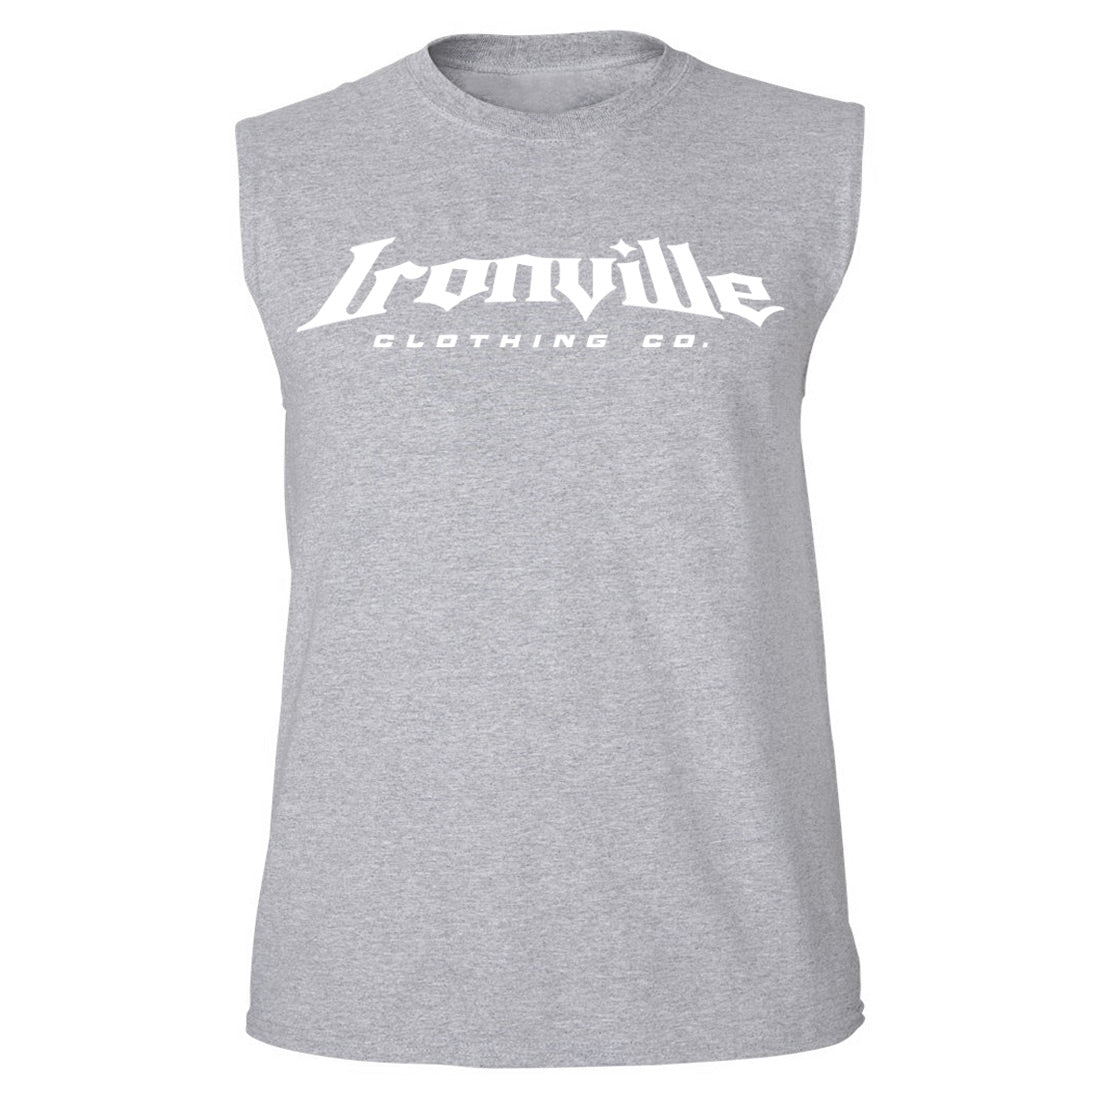 Ironville OLD GLORY Sleeveless Muscle T-shirt